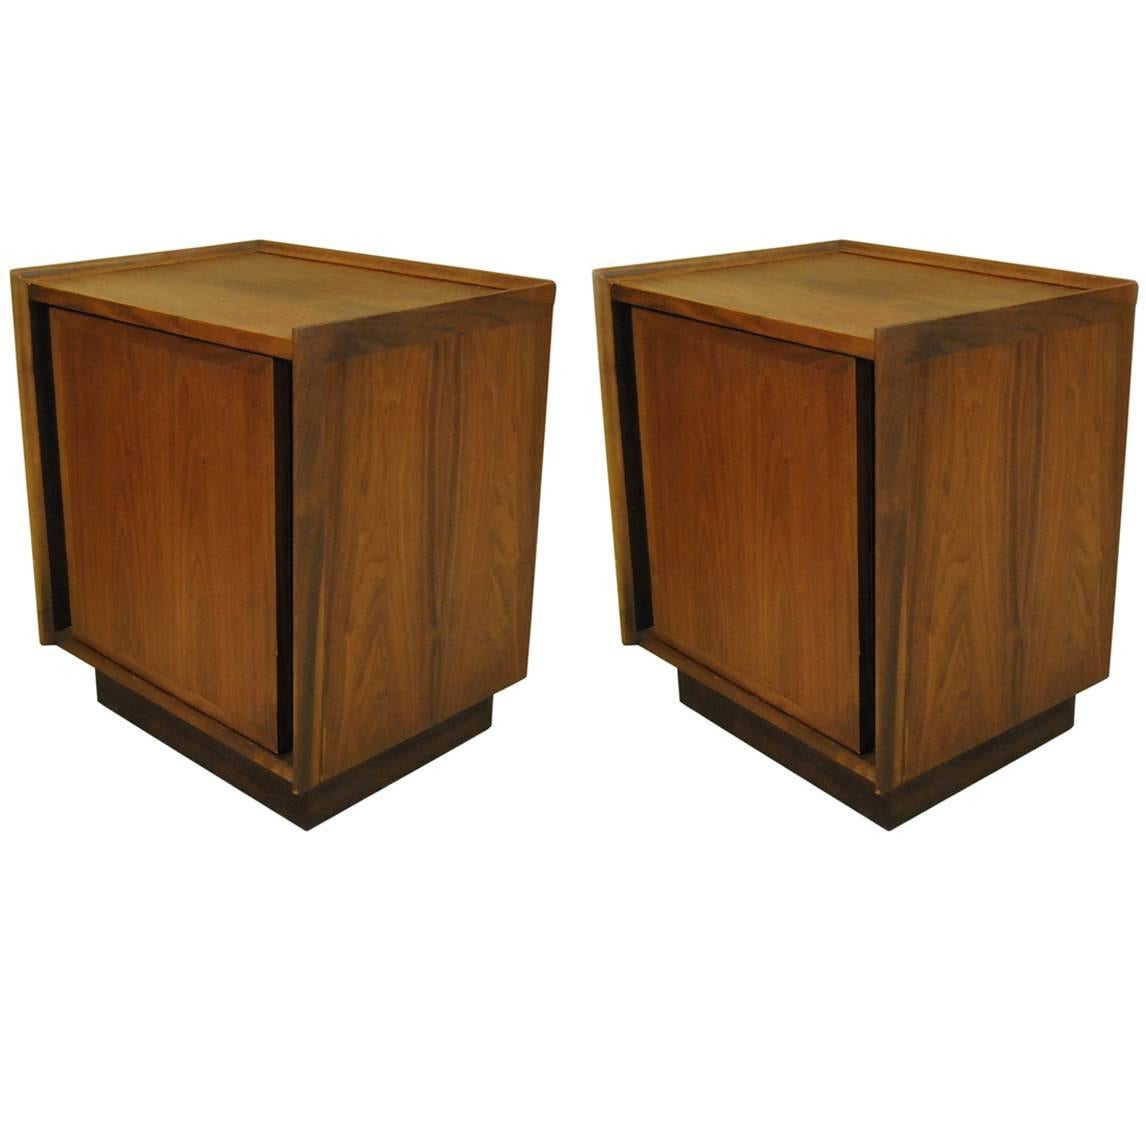 Pair of Mid-Century Modern Walnut Nightstands "Esprit" by Dillingham